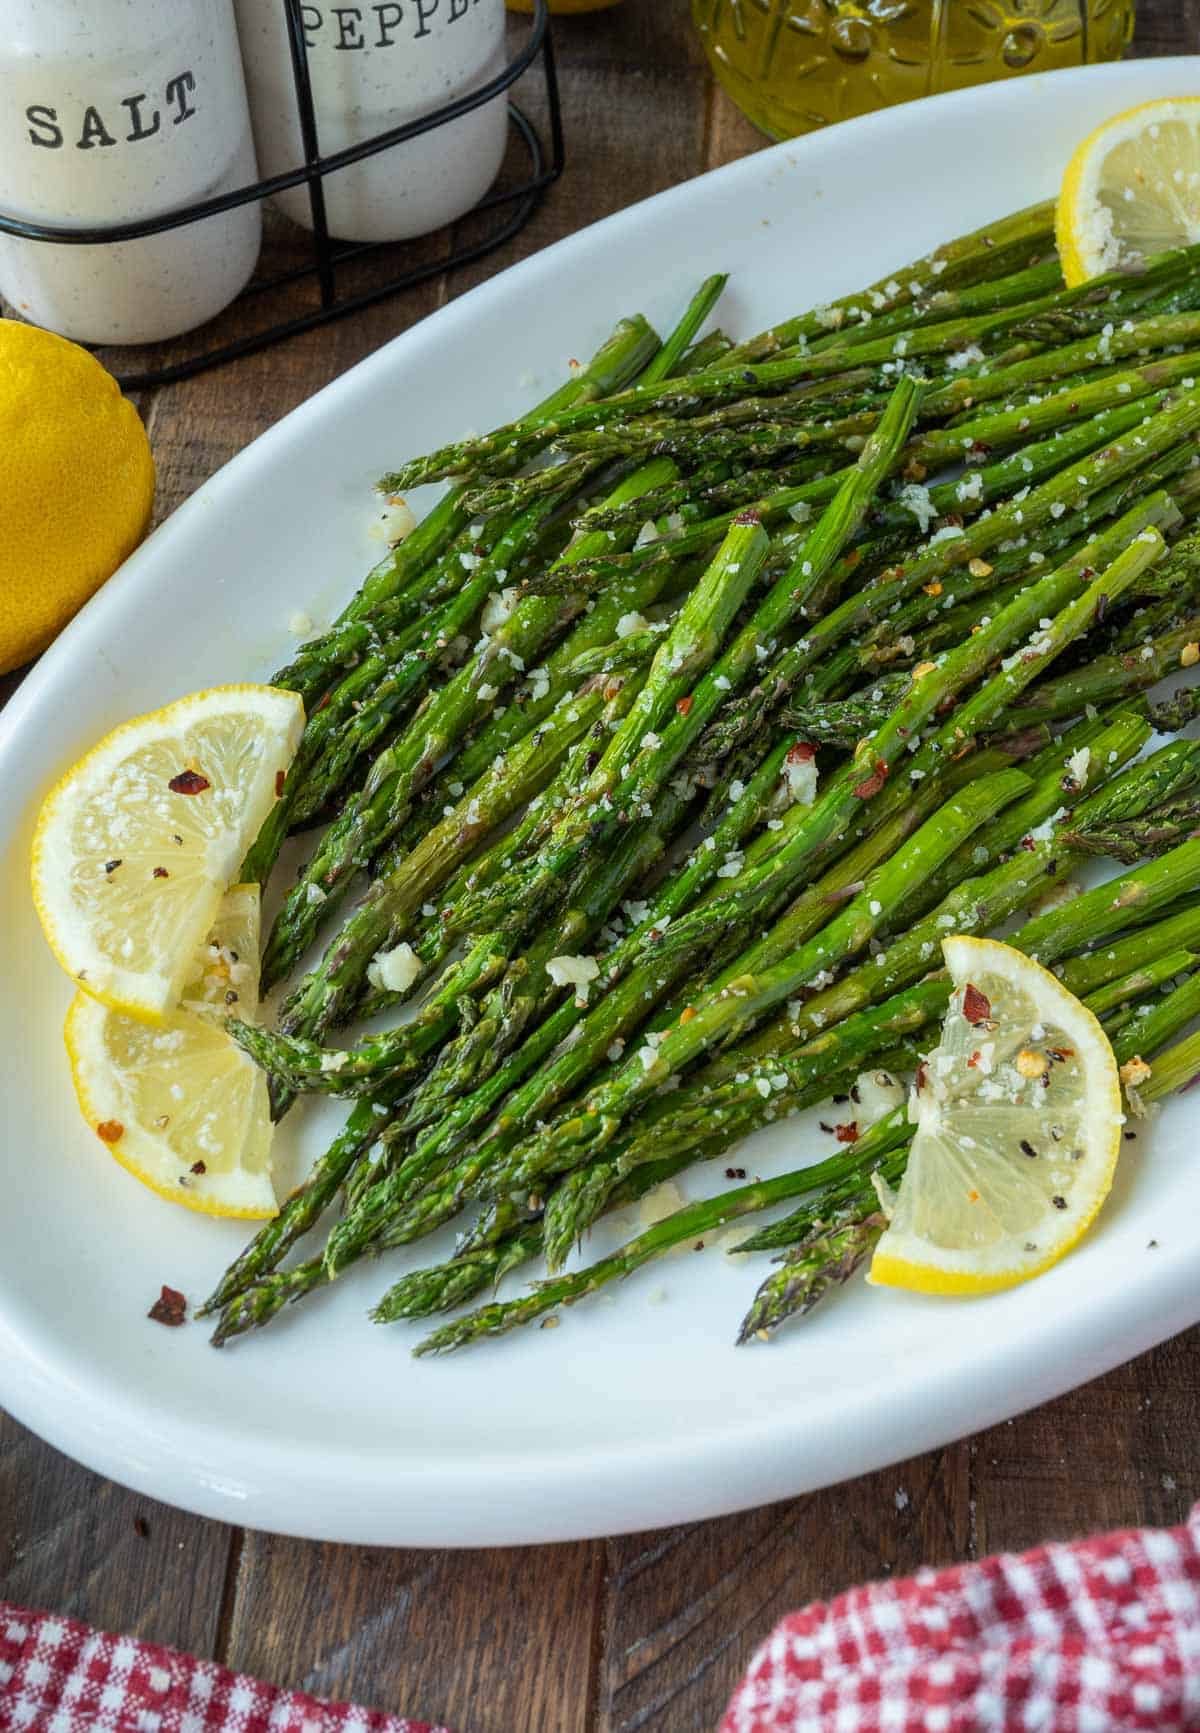 Roasted asparagus on a platter with lemon slices.